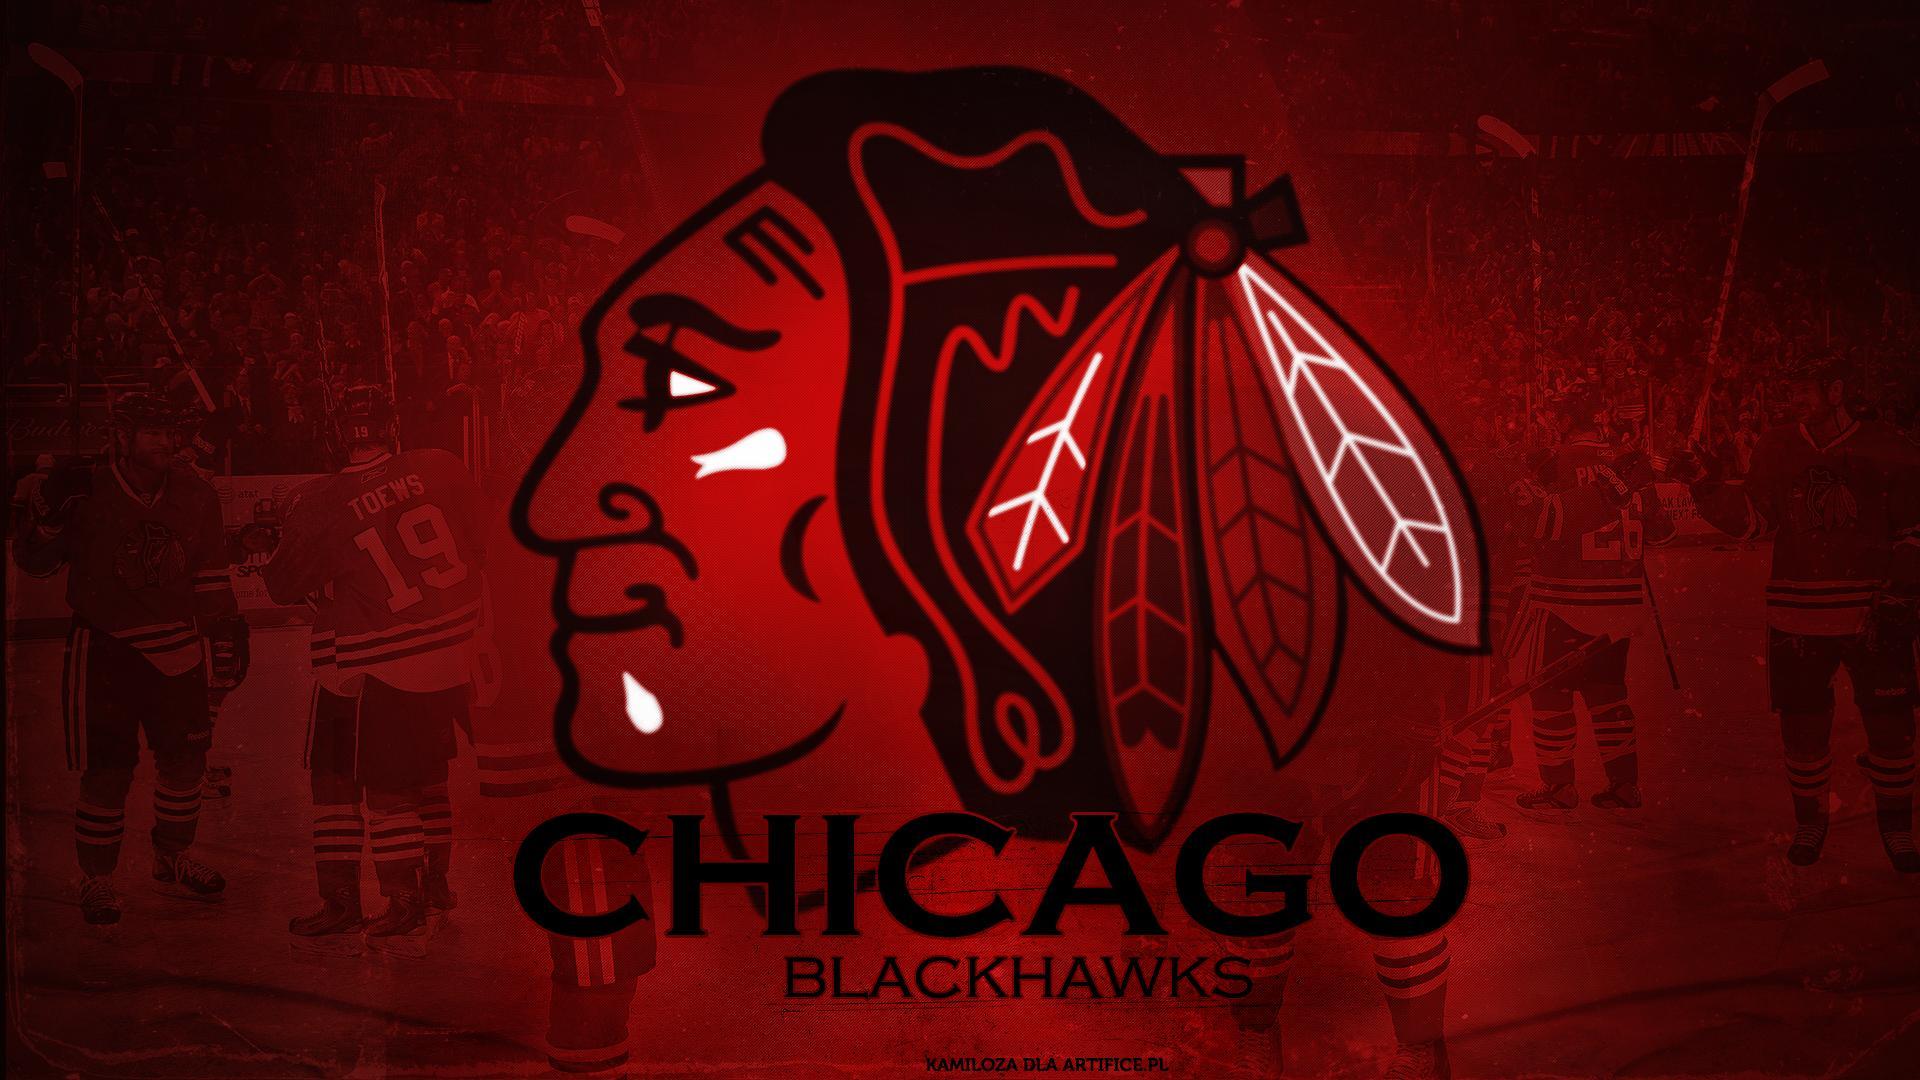 Chicago Blackhawks Desktop Background